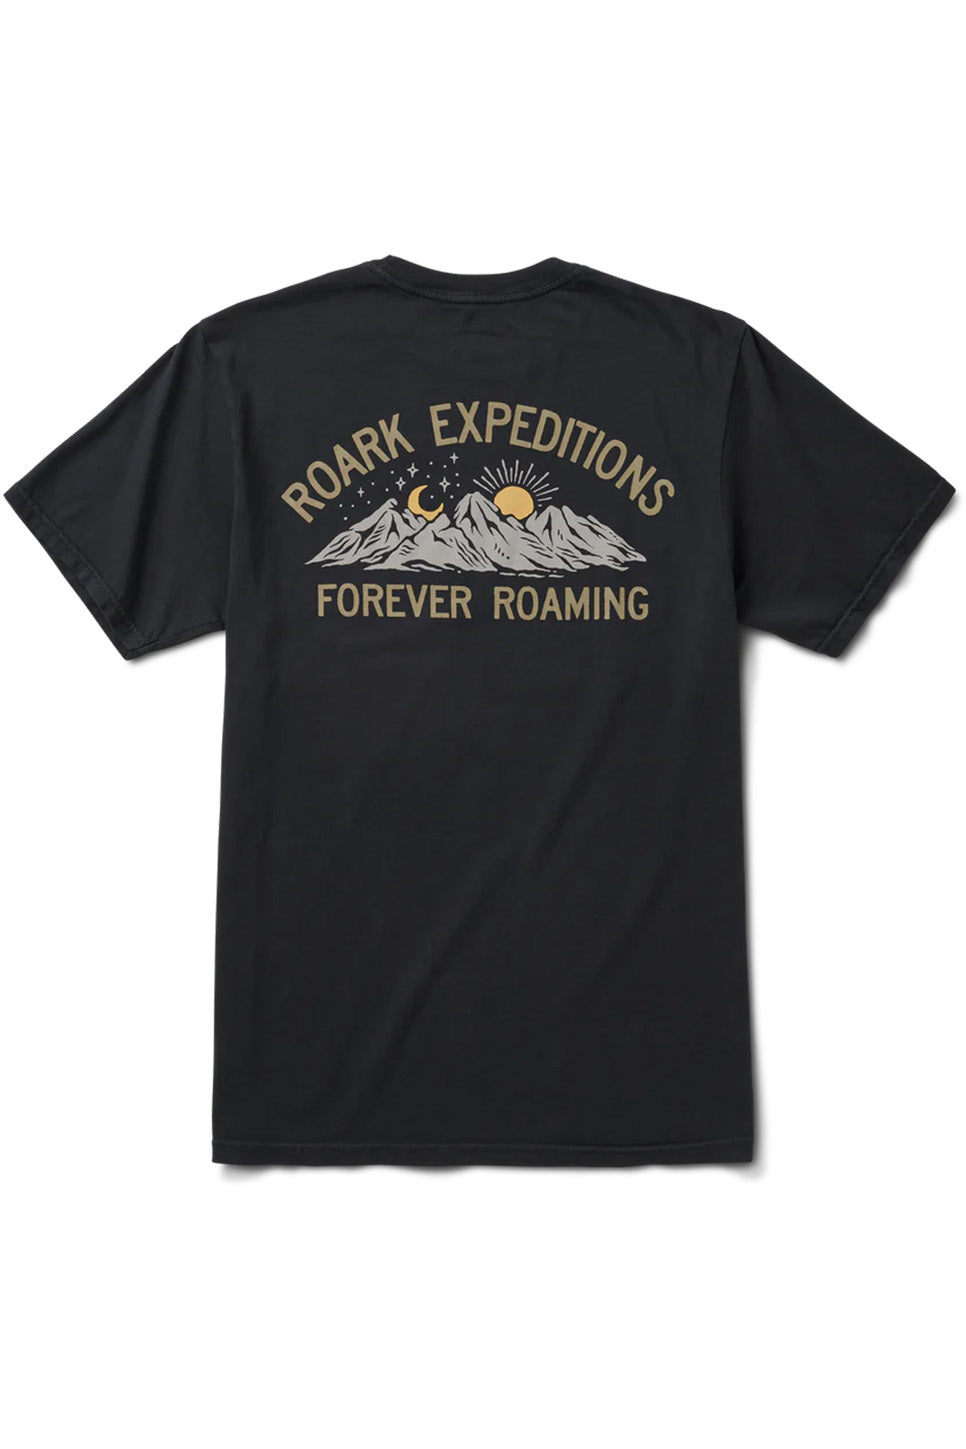 Roark - Expeditions Tee - Black - Back